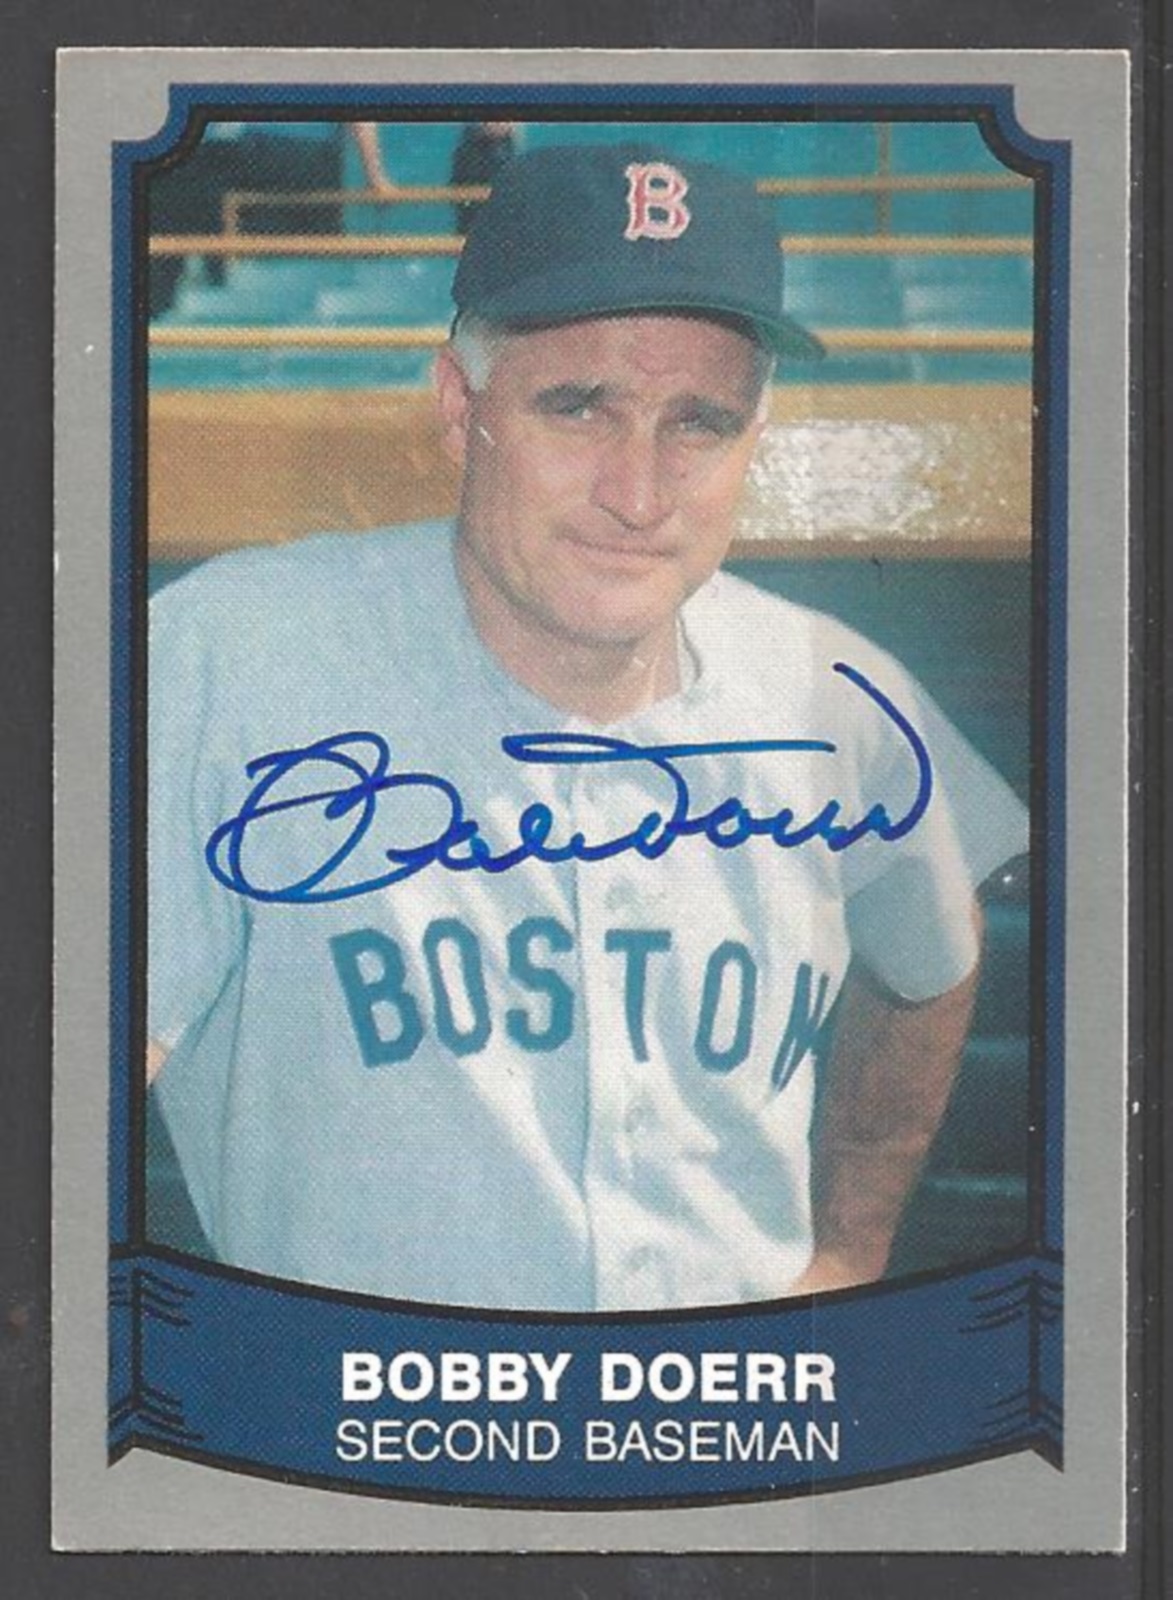 Robert Doerr baseball card